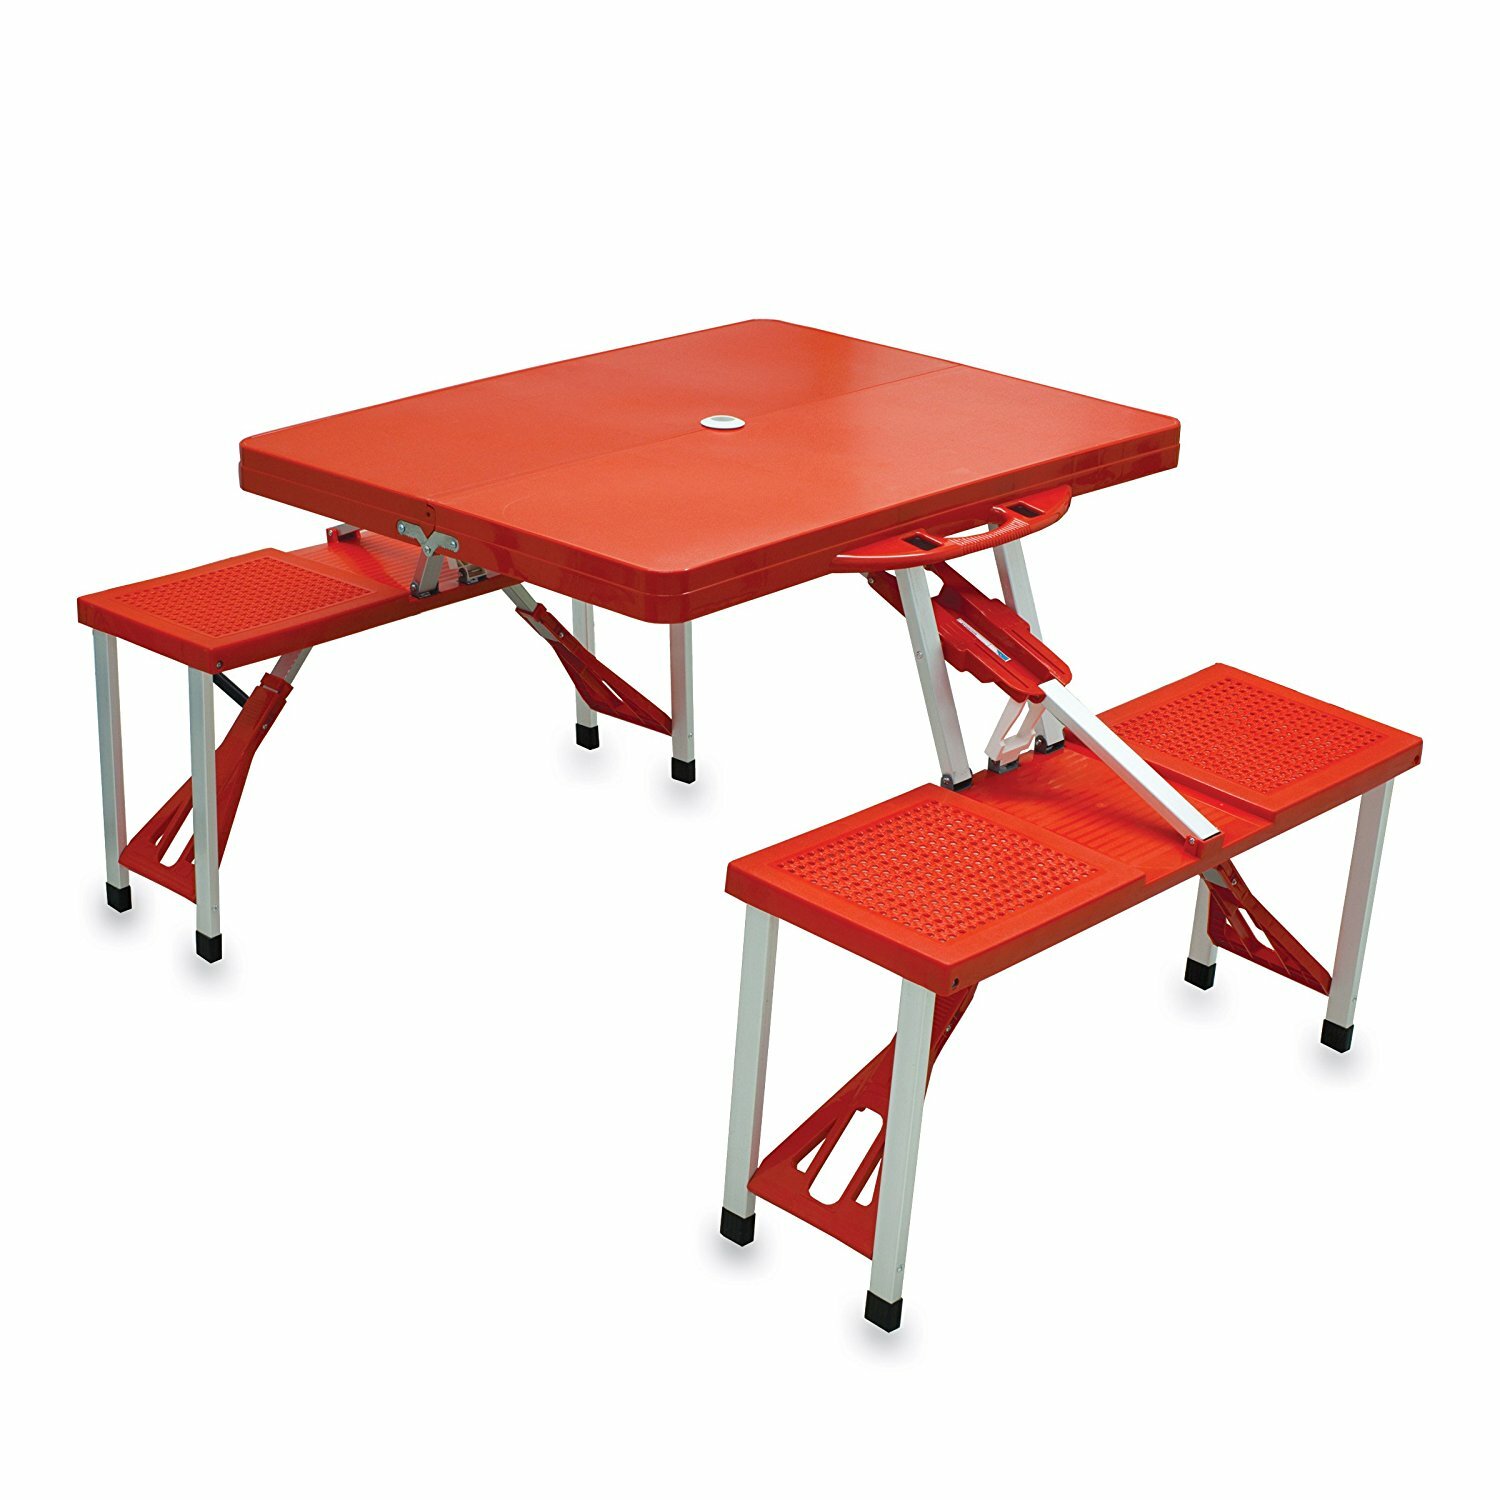 Folding Tables Costco | Costco Utility Table | Costco Folding Tables